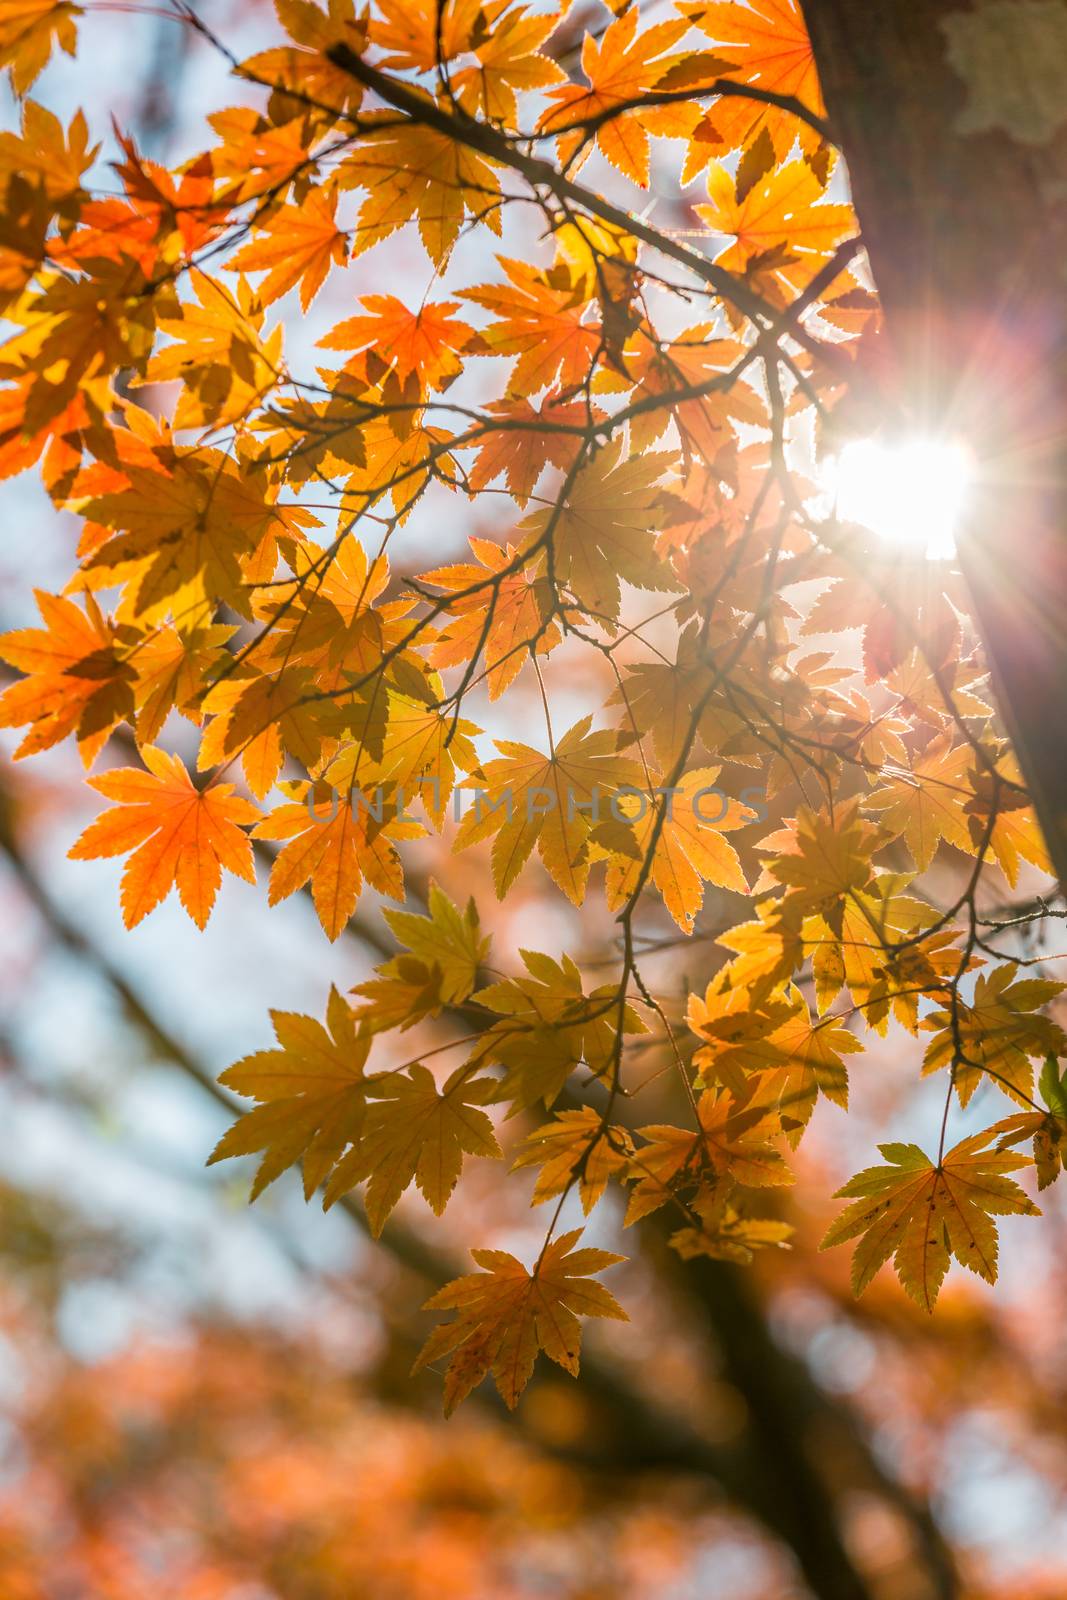 autumn Background by vichie81